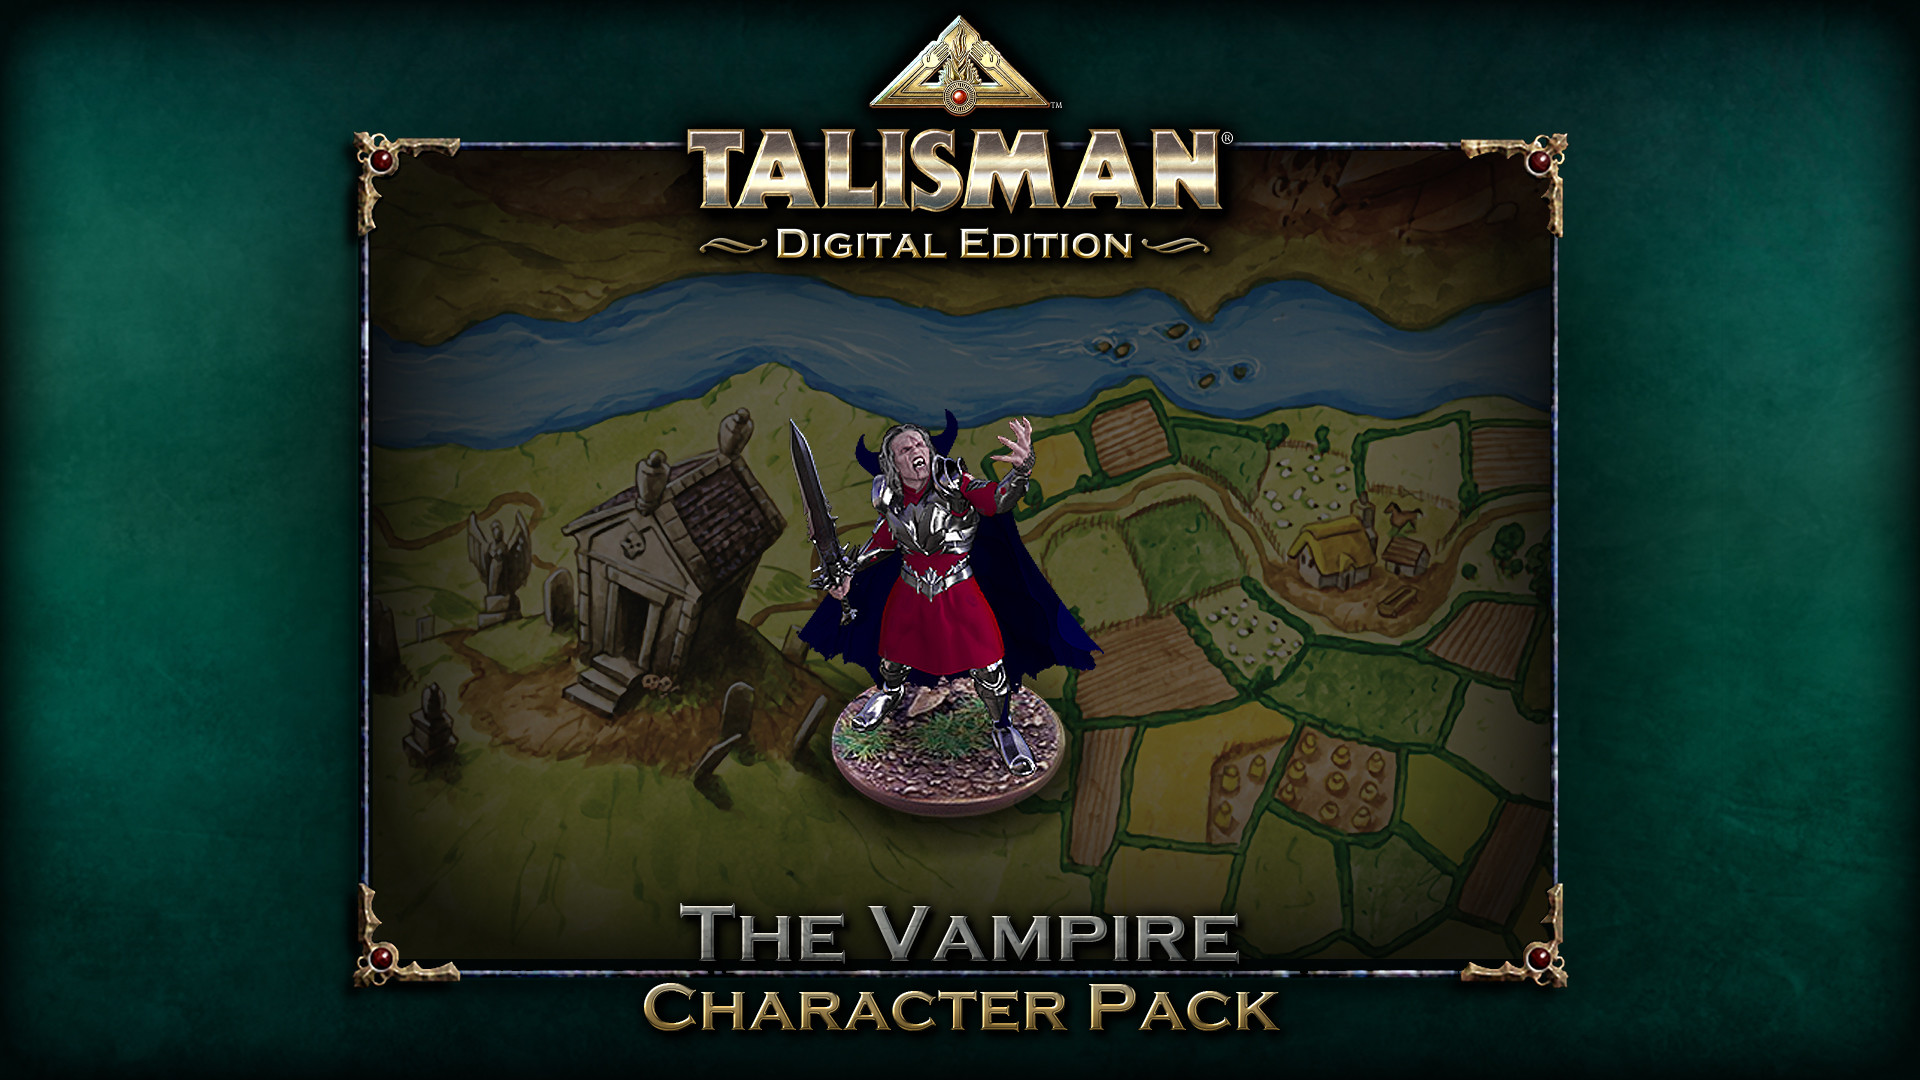 [$ 0.78] Talisman - Character Pack #22 - Vampire DLC Steam CD Key